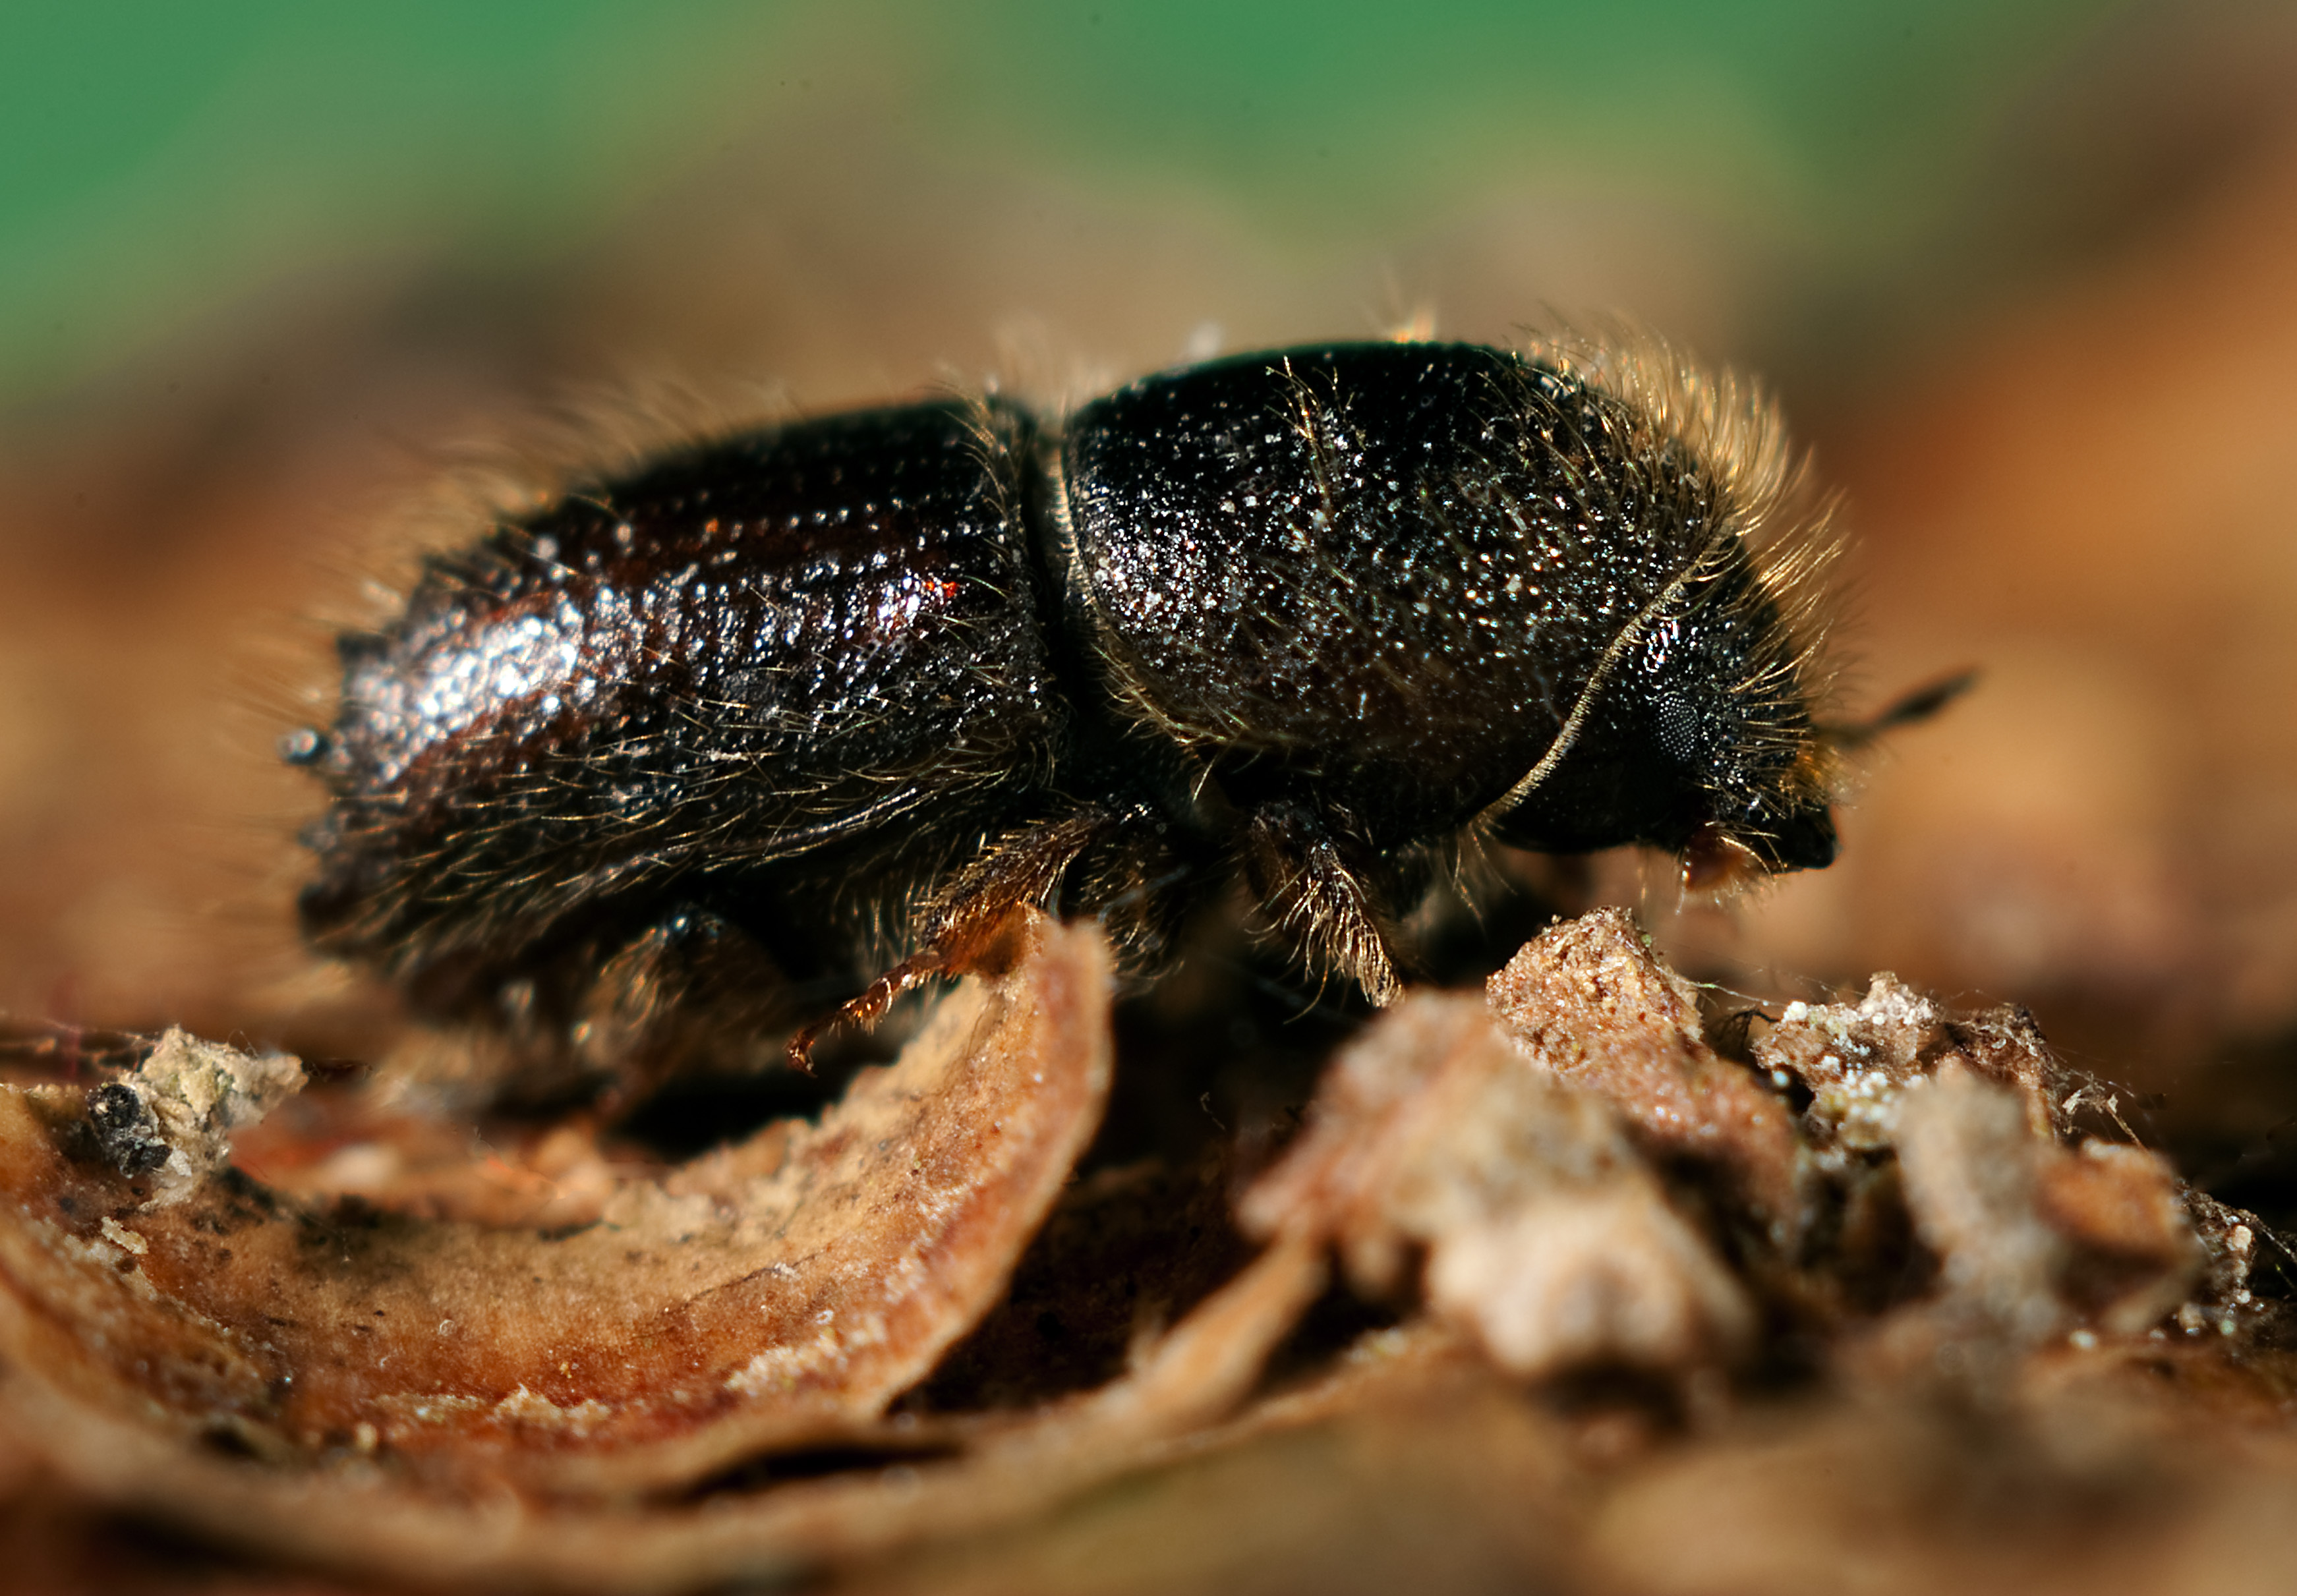 8-tandad barkborre_bark beetle_Ips typugraphus